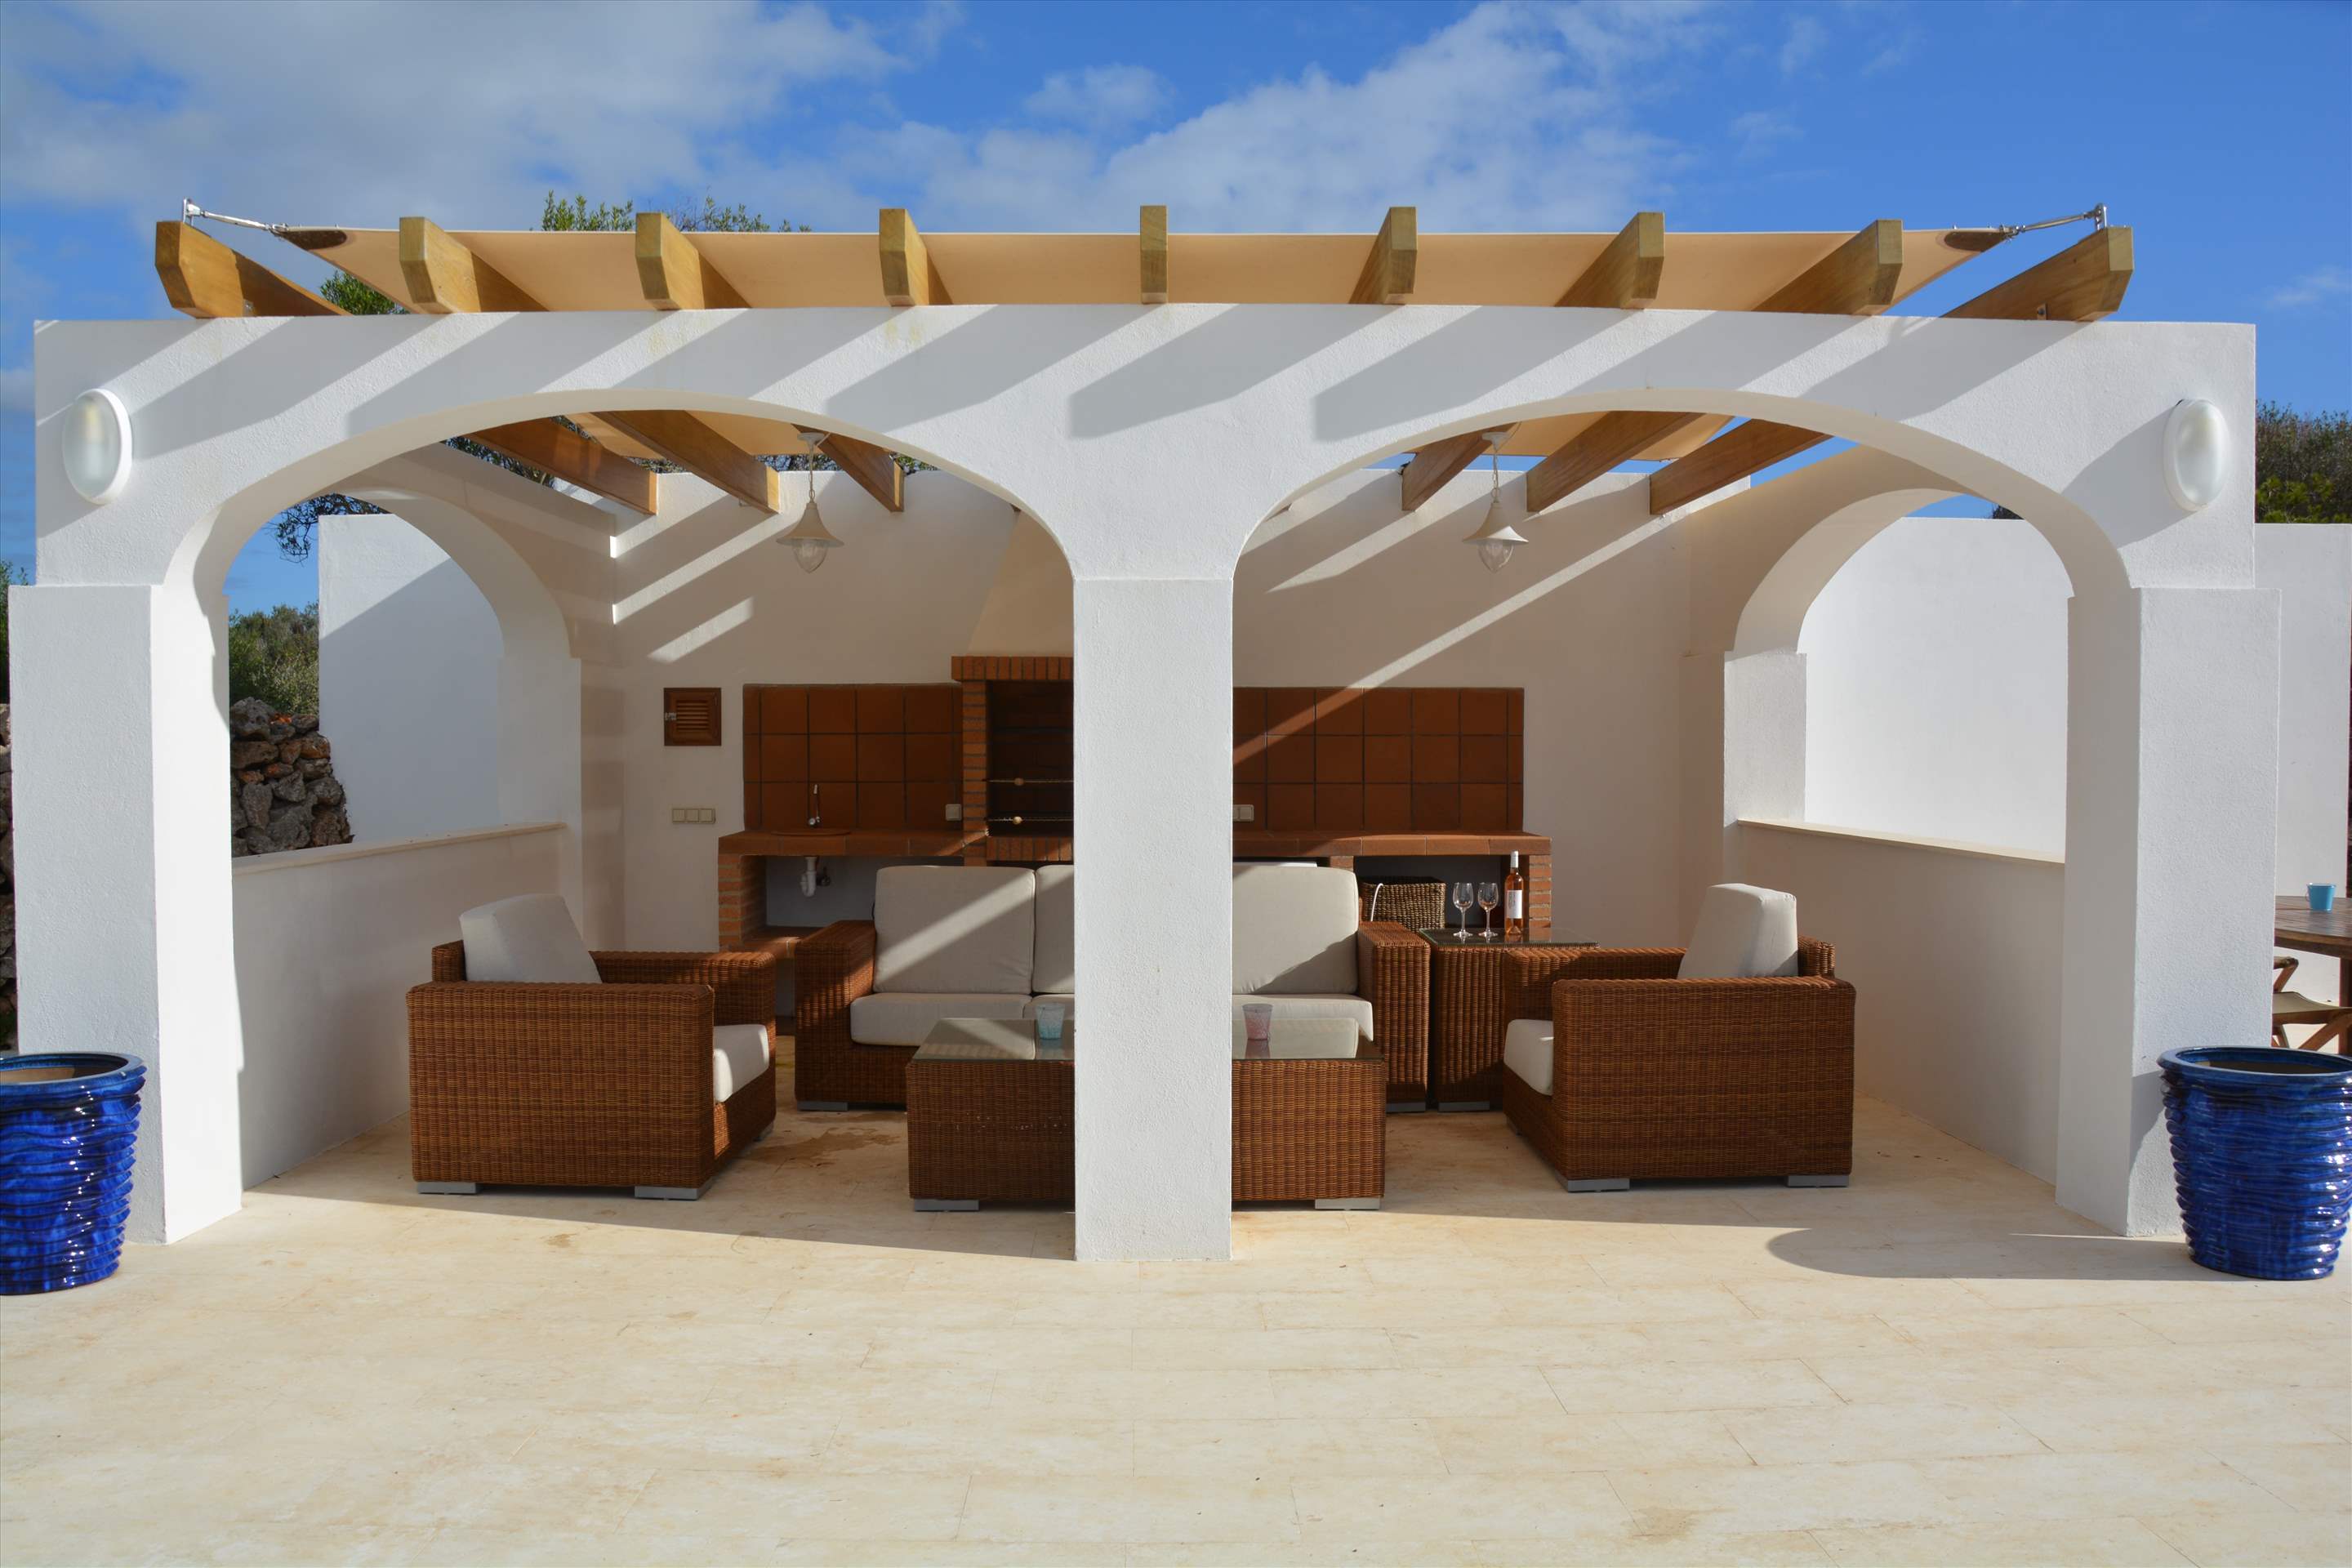 Les Arcs, 5 bedroom villa in Mahon, San Luis & South East, Menorca Photo #15